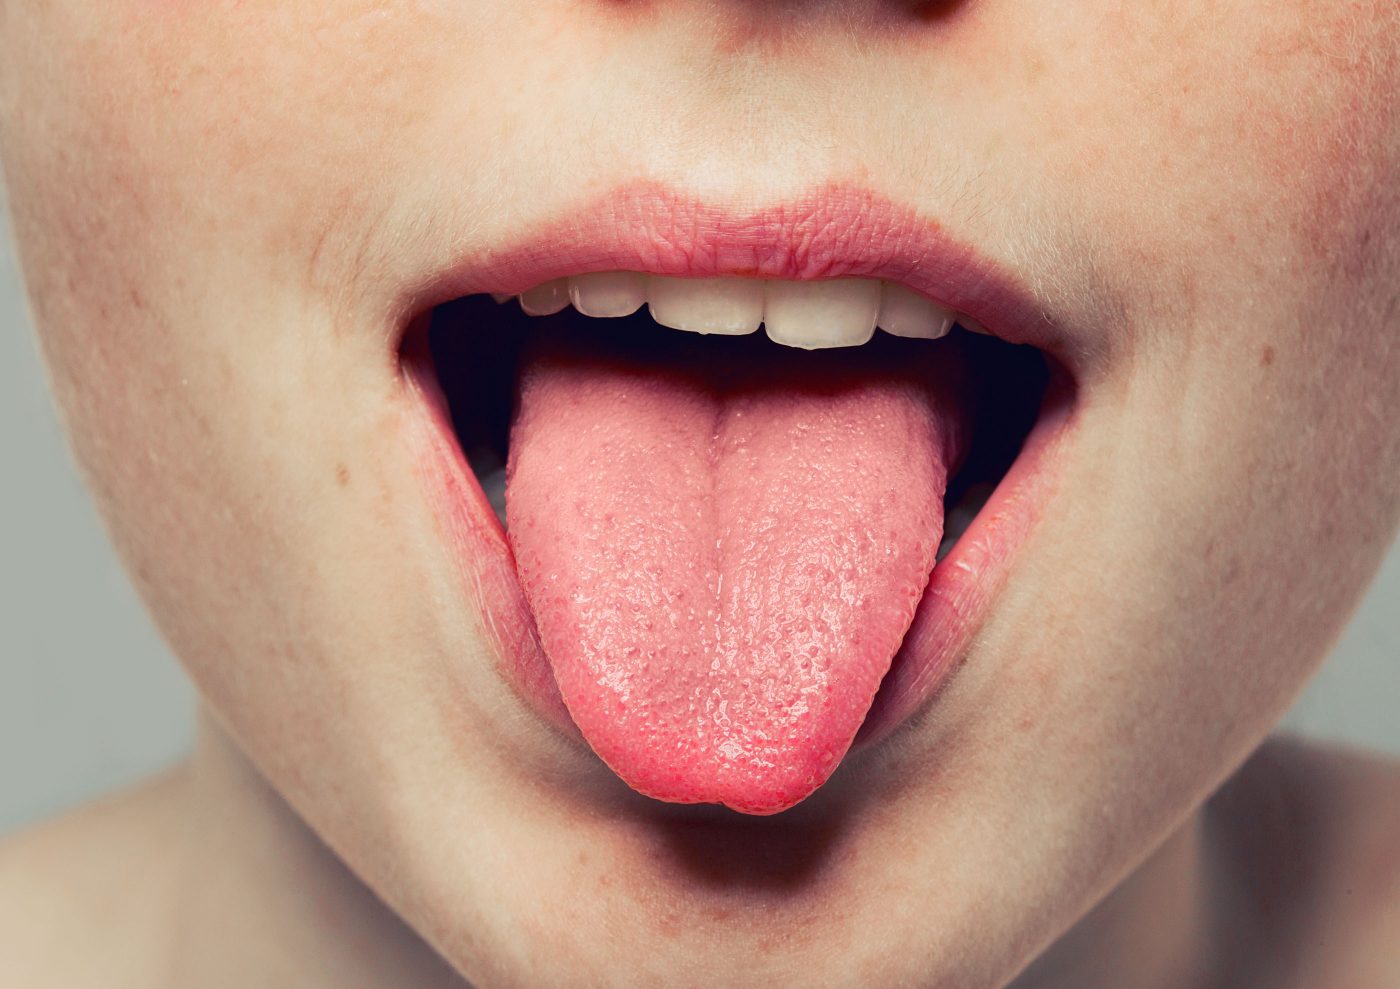 tongue muscles